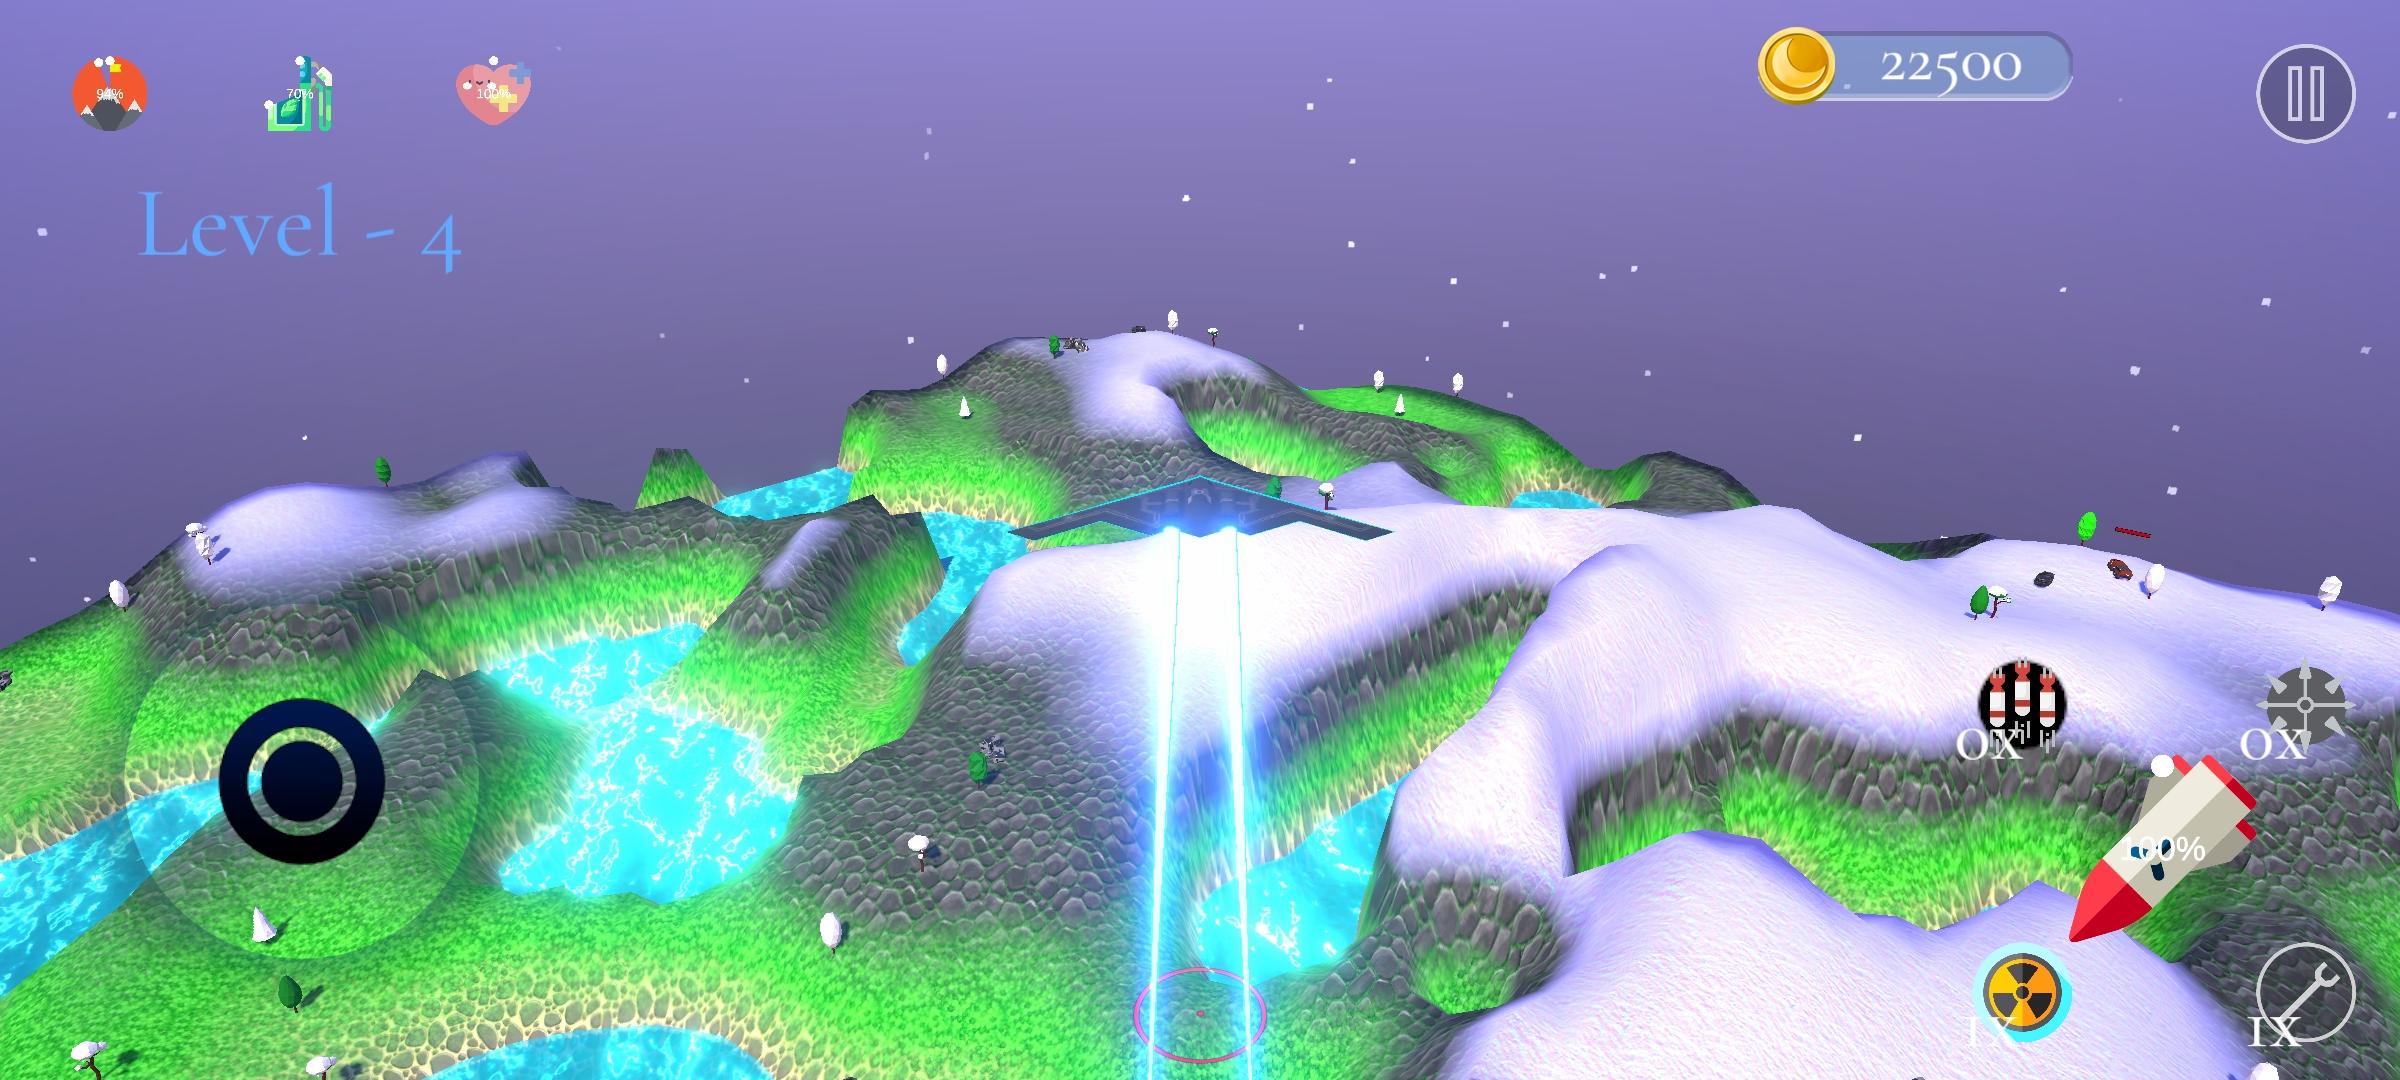 Infinite Bomber 3D 1.8 Screenshot 17